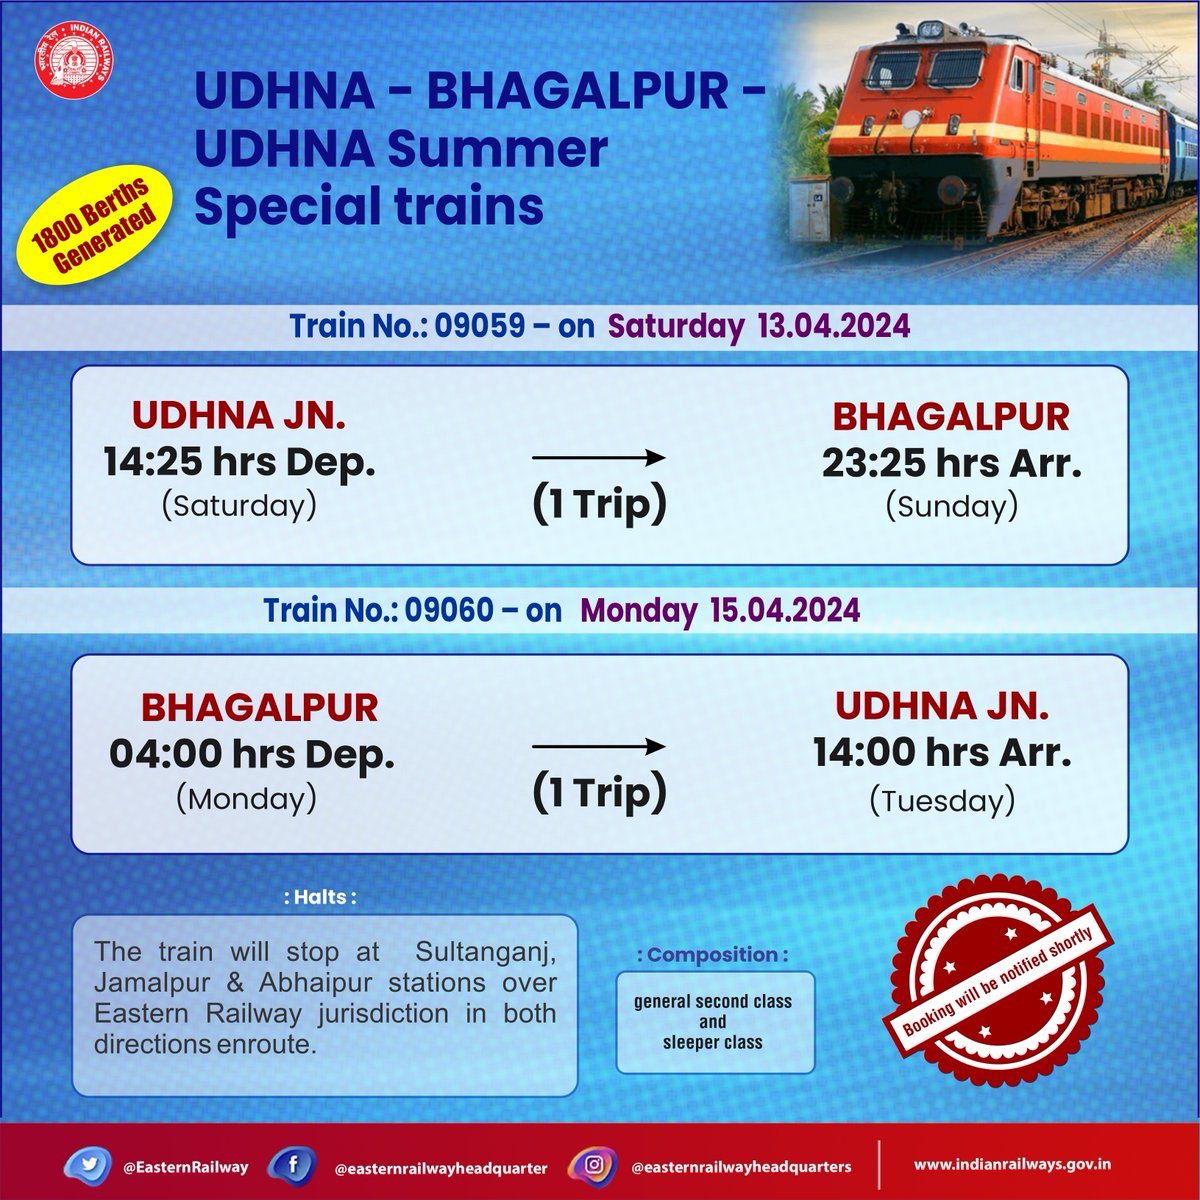 UDHNA - BHAGALPUR - UDHNA Summer Special trains